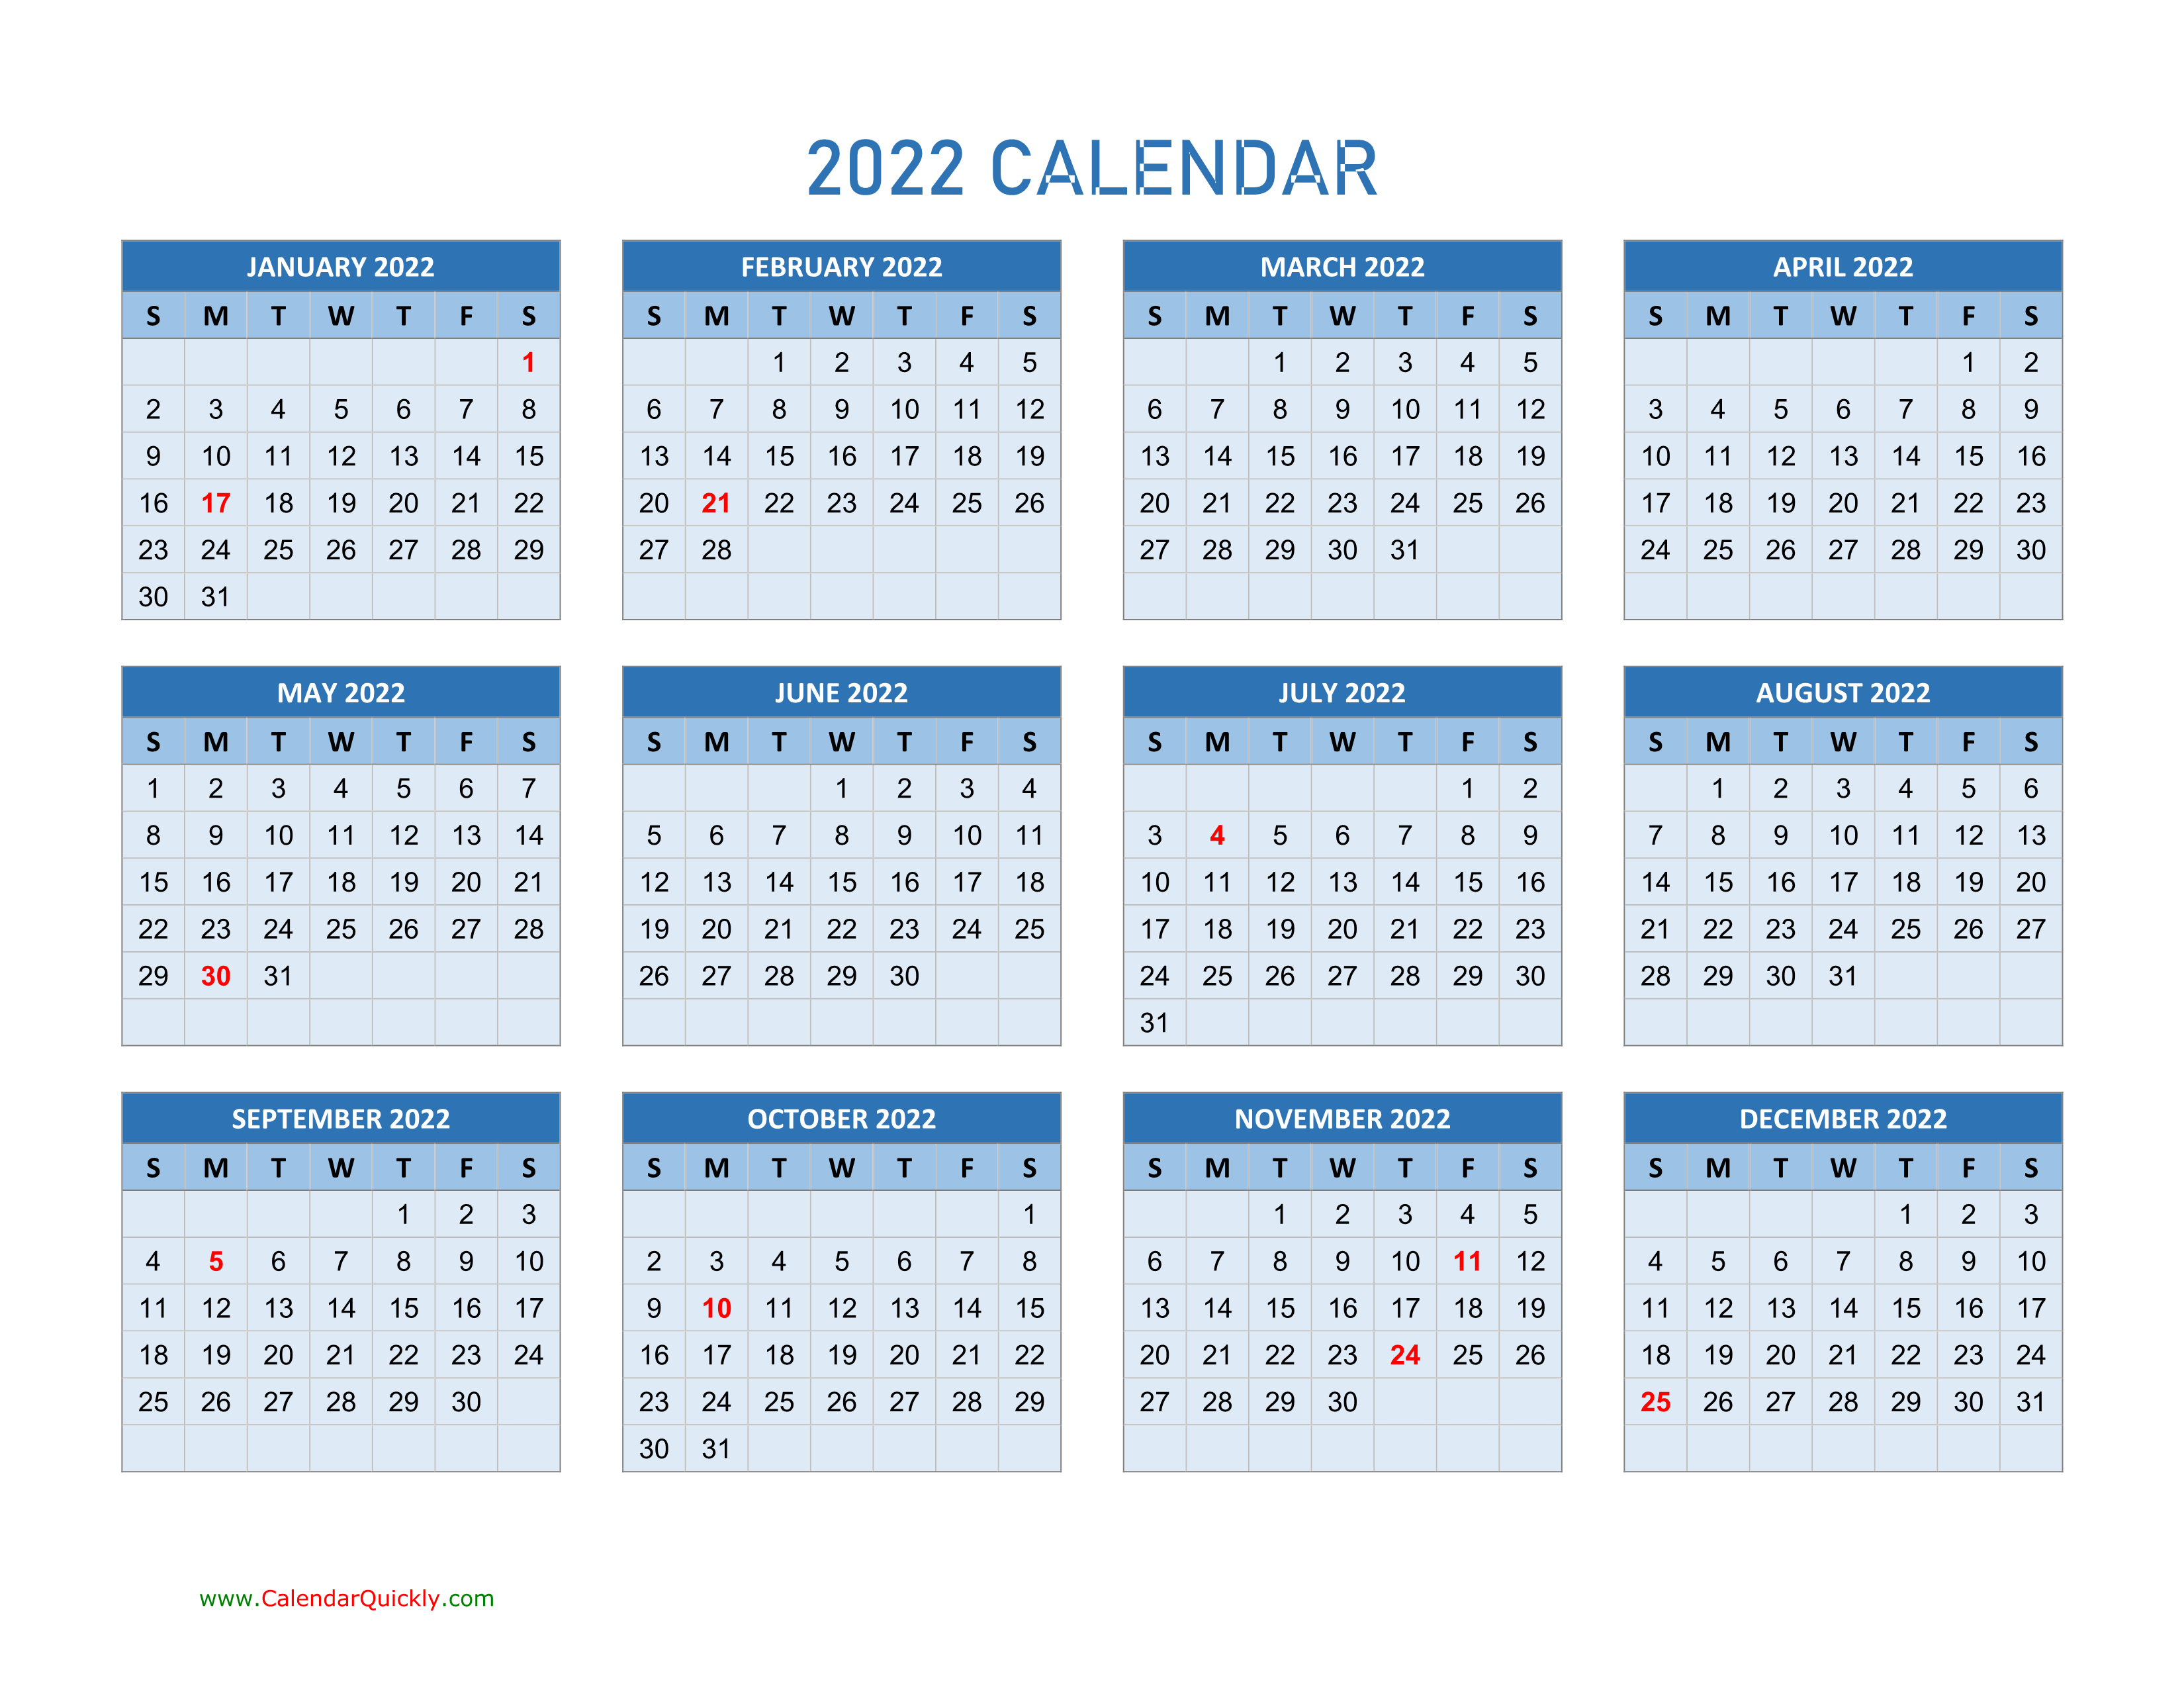 year-2022-calendars-calendar-quickly